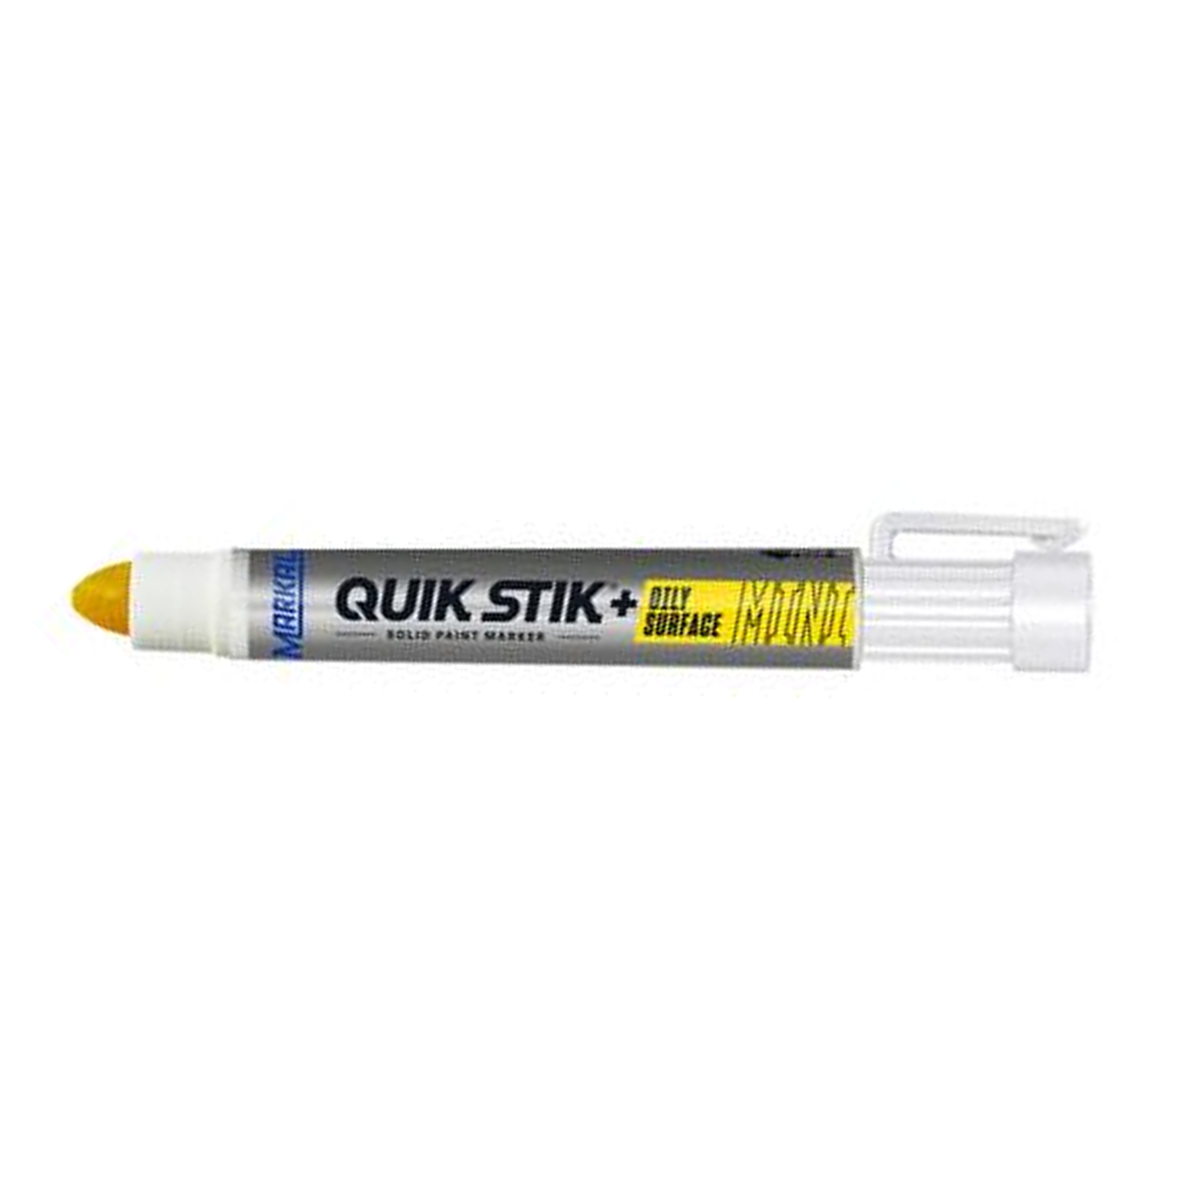 La-Co Markal Silver-Streak Red-Riter 96101 Silver Welder Pencil 96101  MKL96101 - Gas and Supply